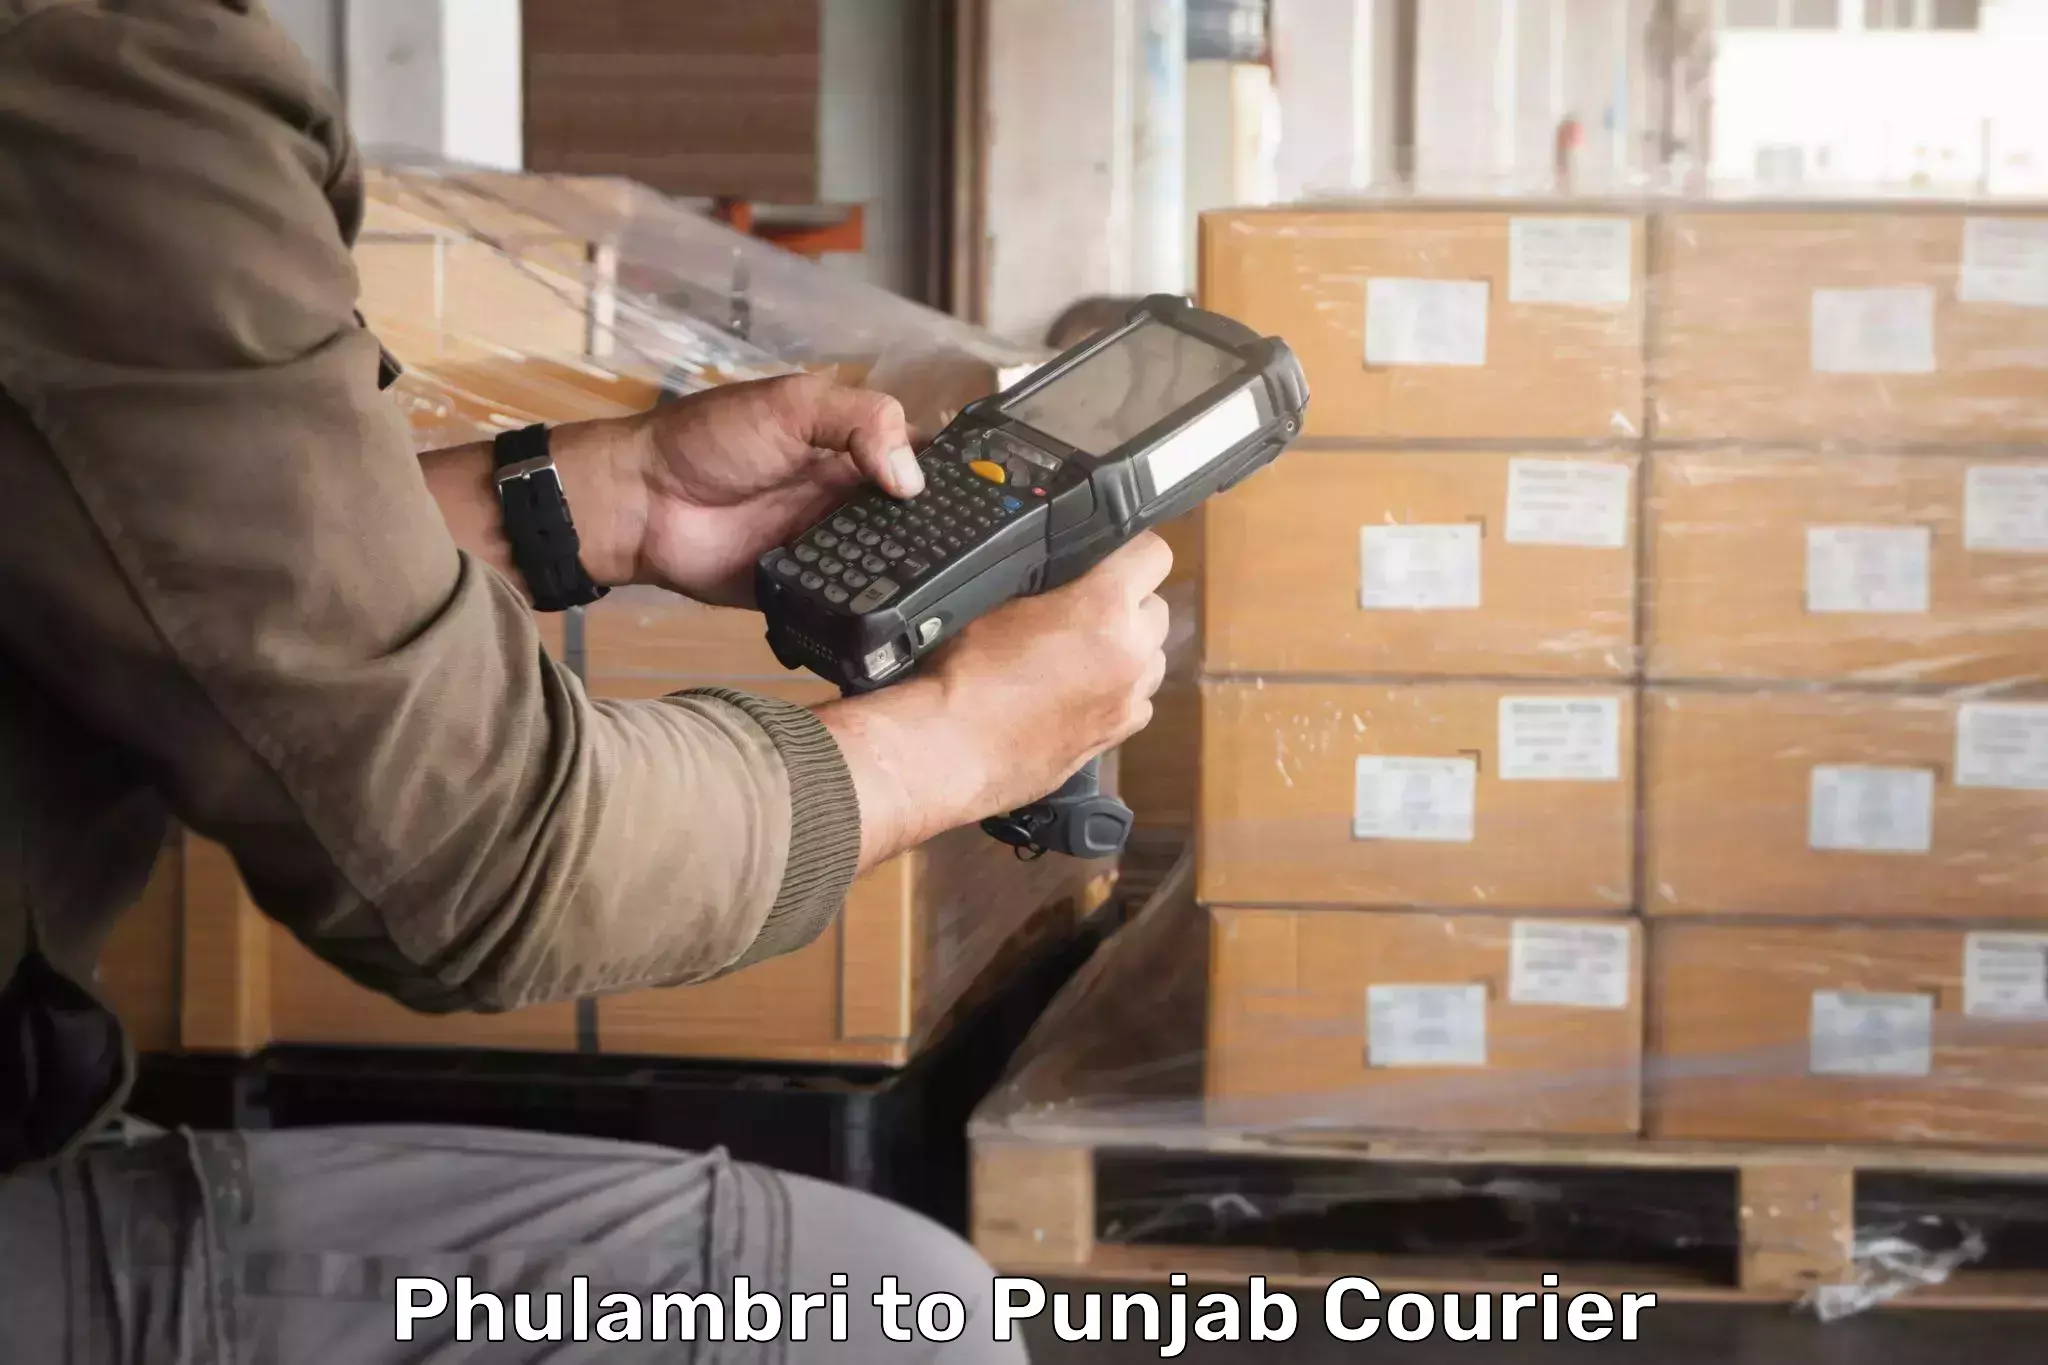 Courier service efficiency Phulambri to Punjab